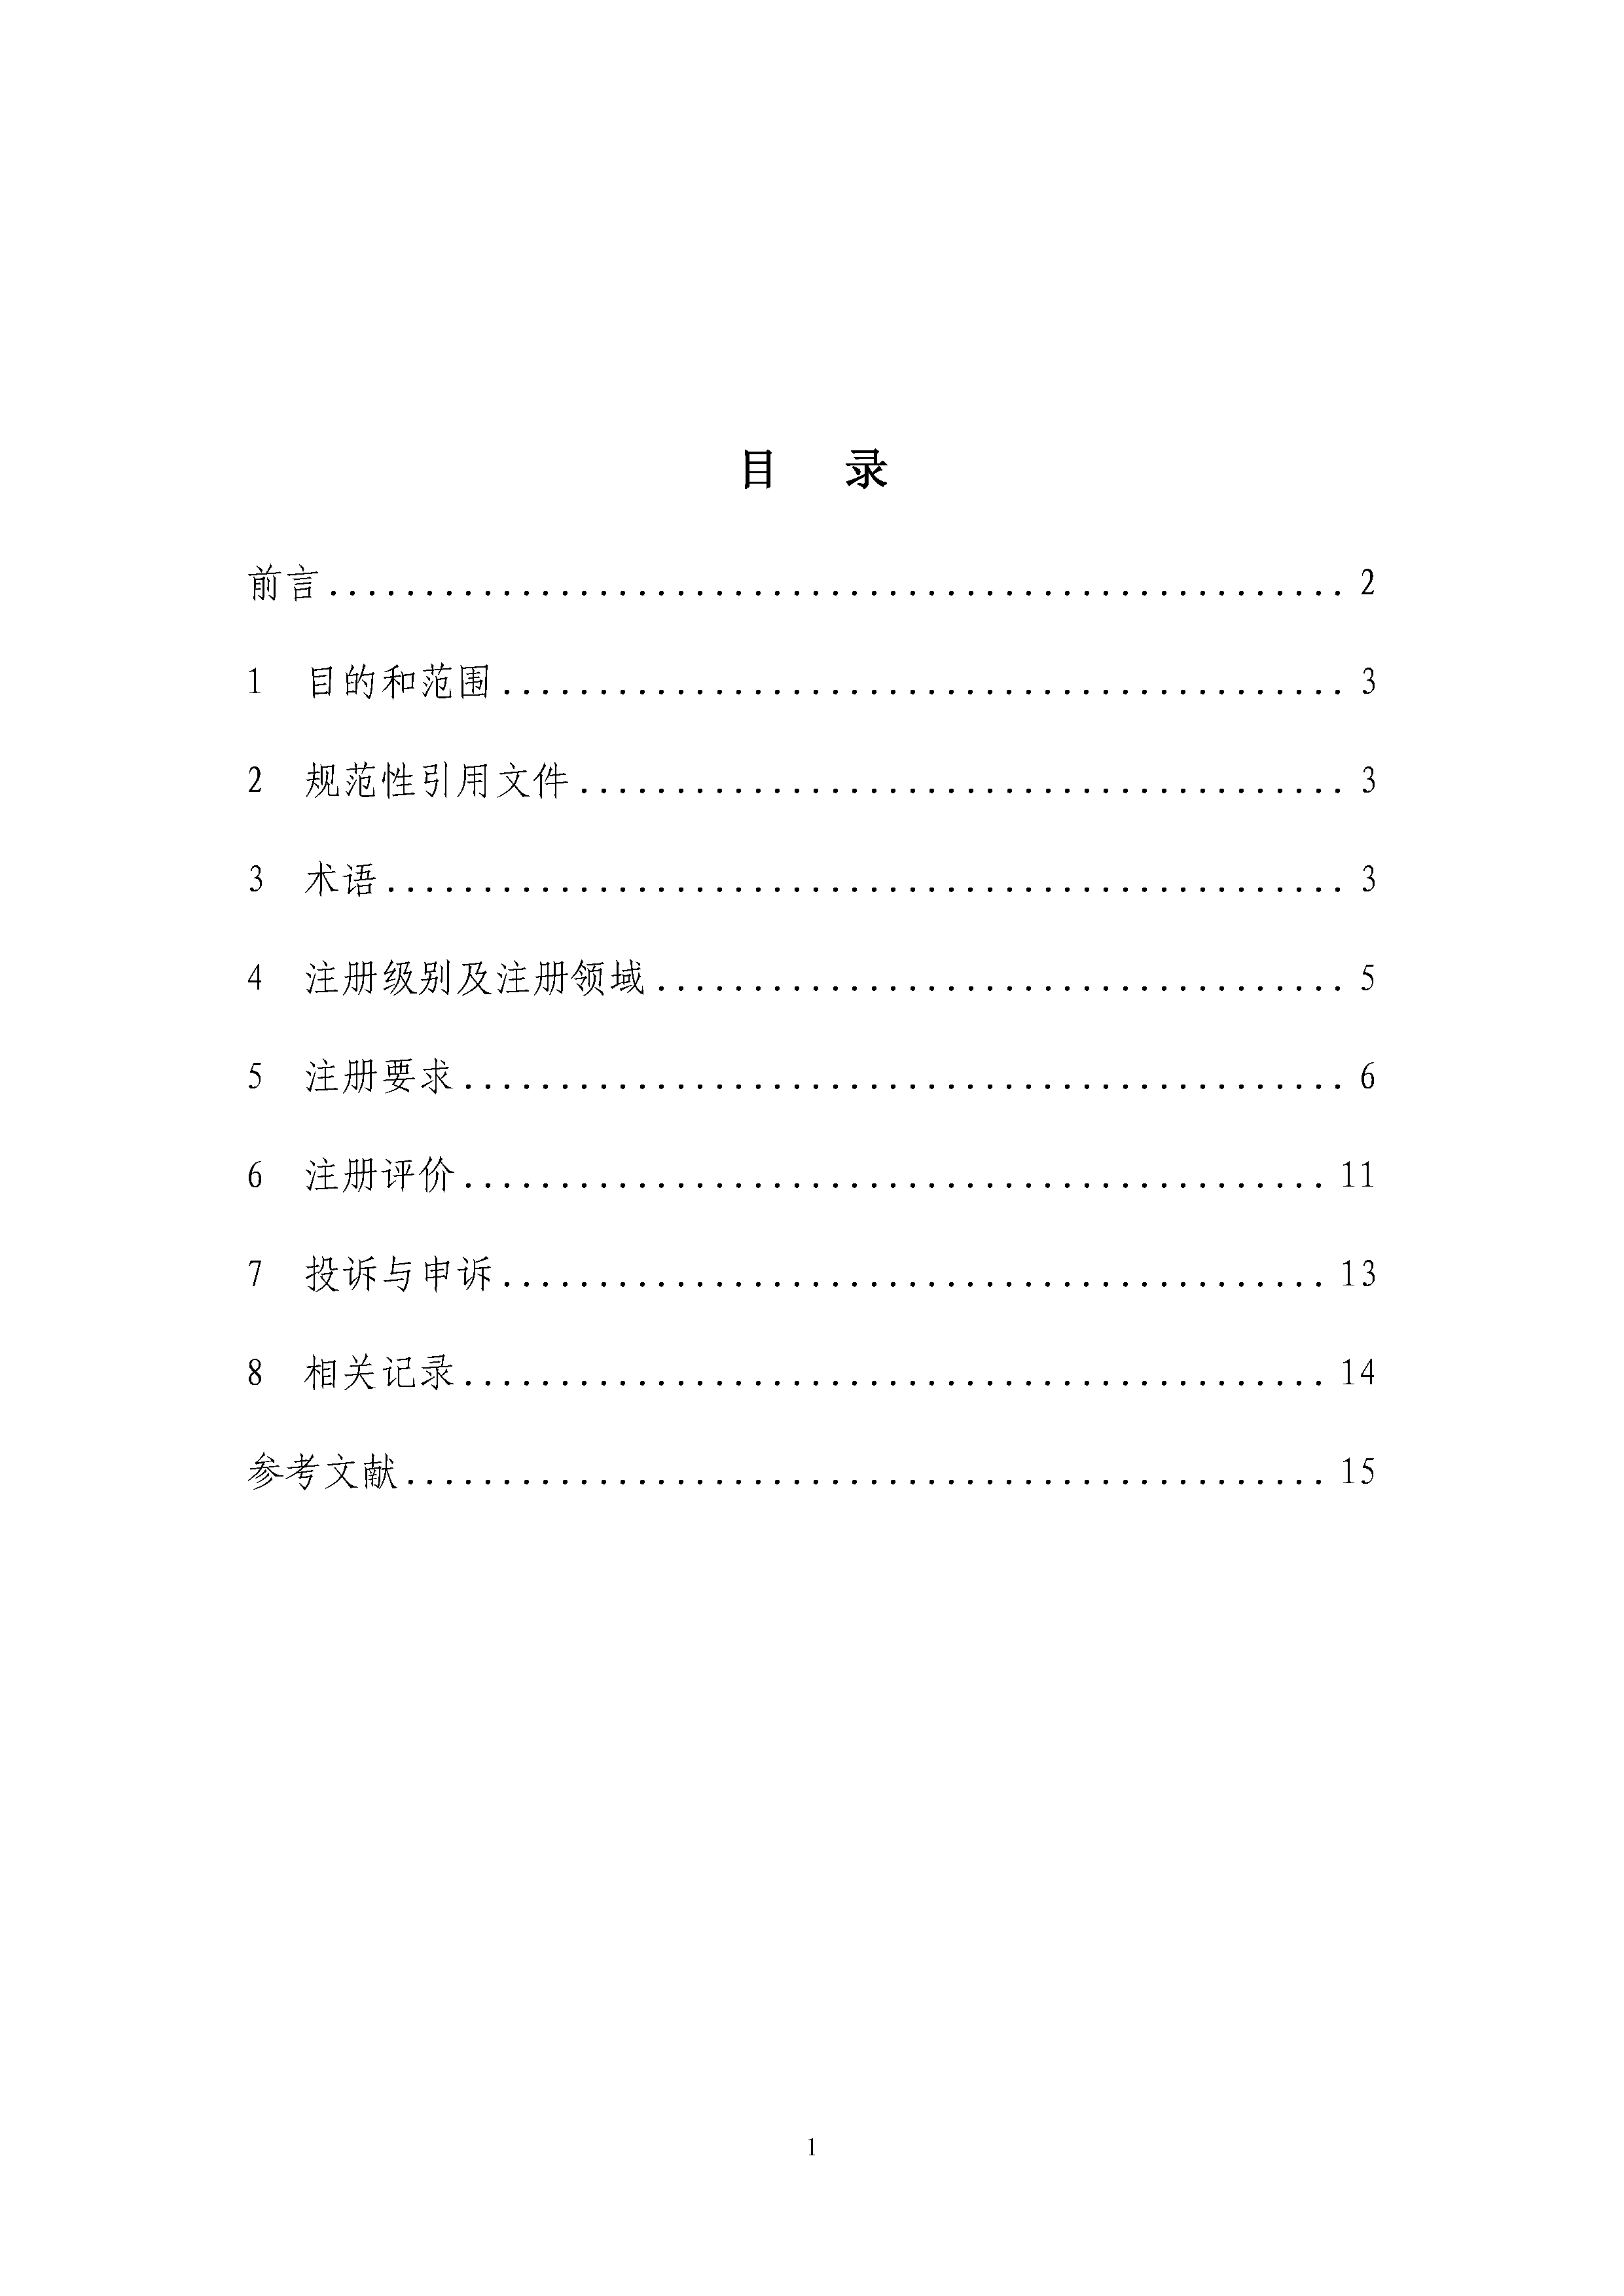 B.5《中国核能行业协会供应商评价评审员注册准则》_页面_02.png